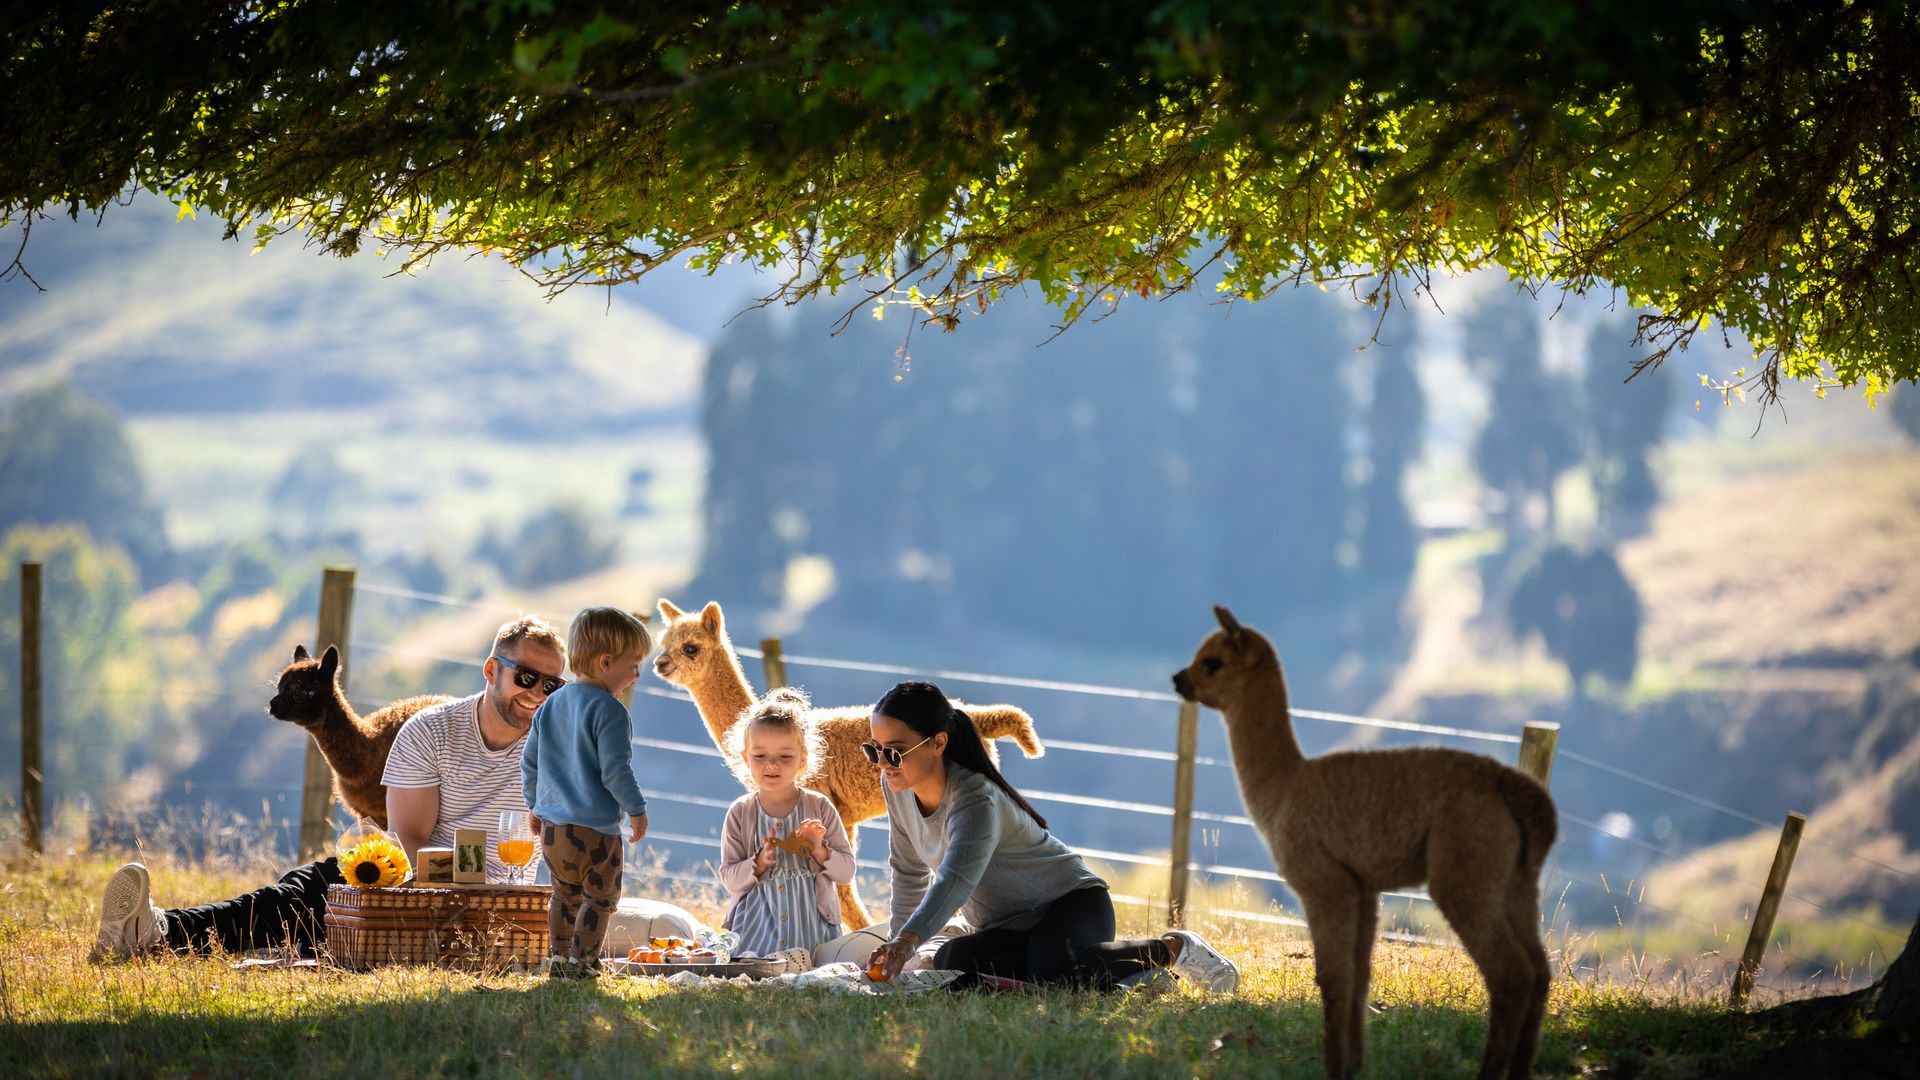 Family having a picnic amongst alapaccas - Visit Ruapehu.jpg